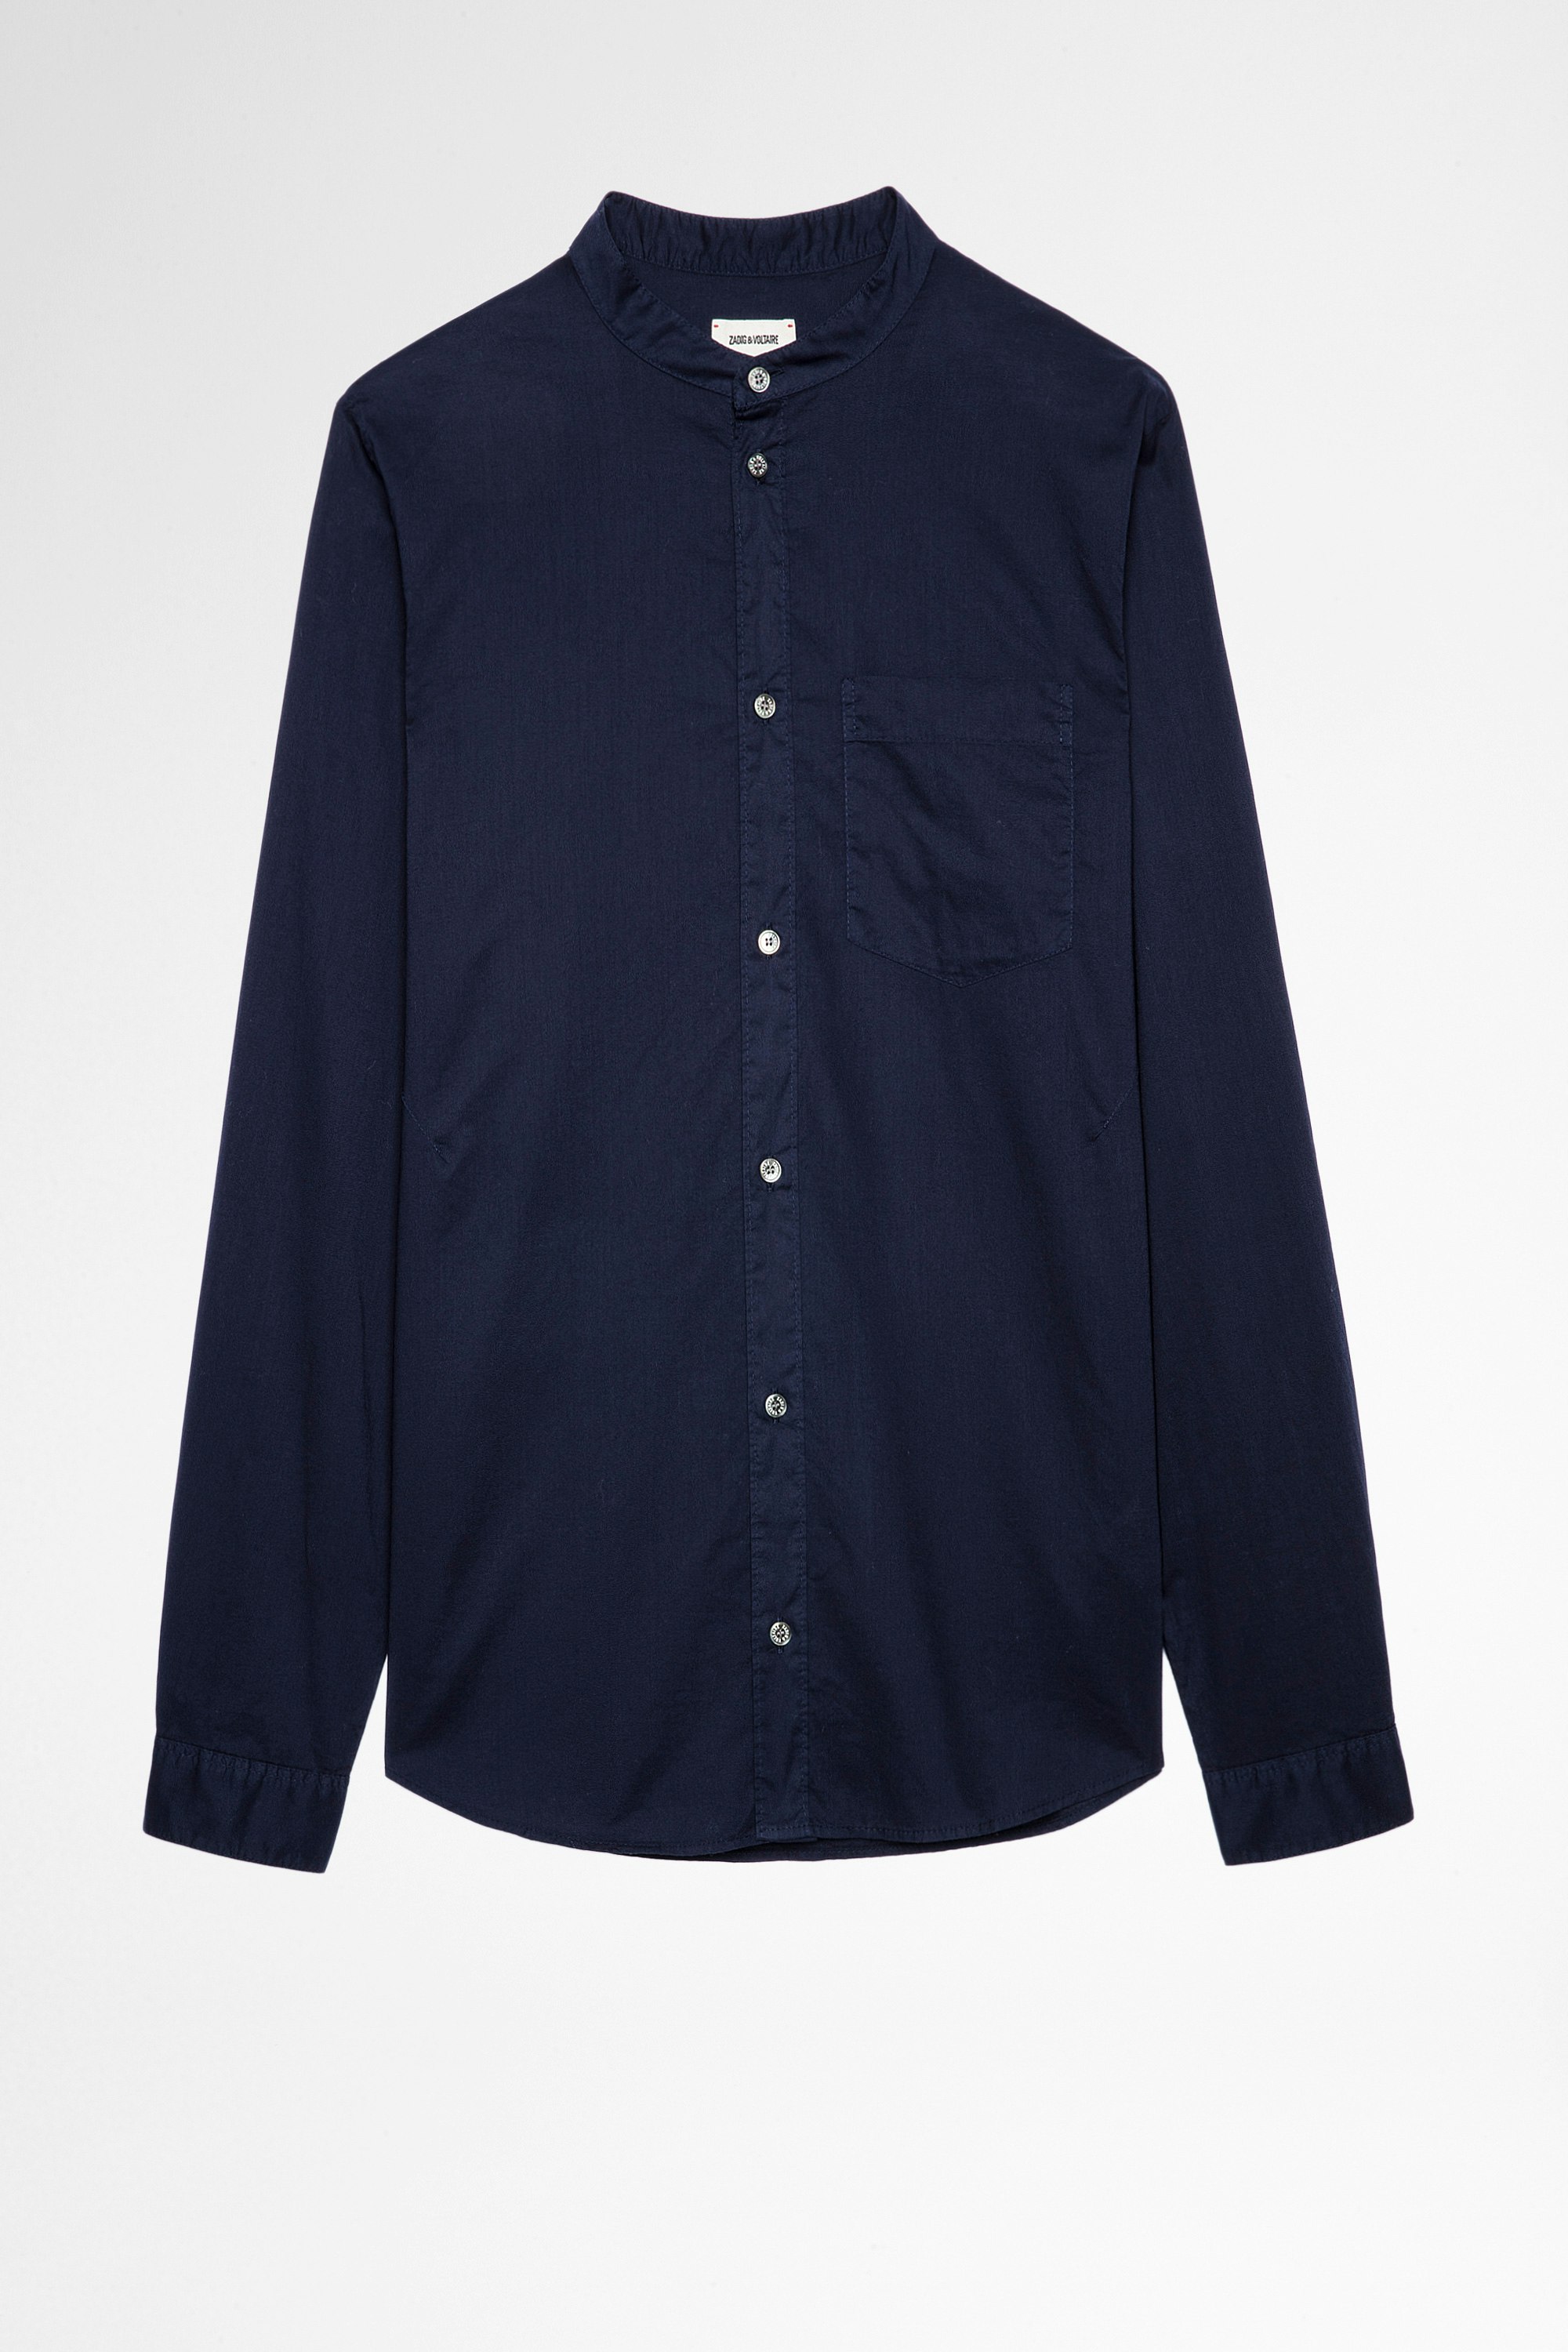 Thibaut Shirt Men’s navy blue cotton shirt